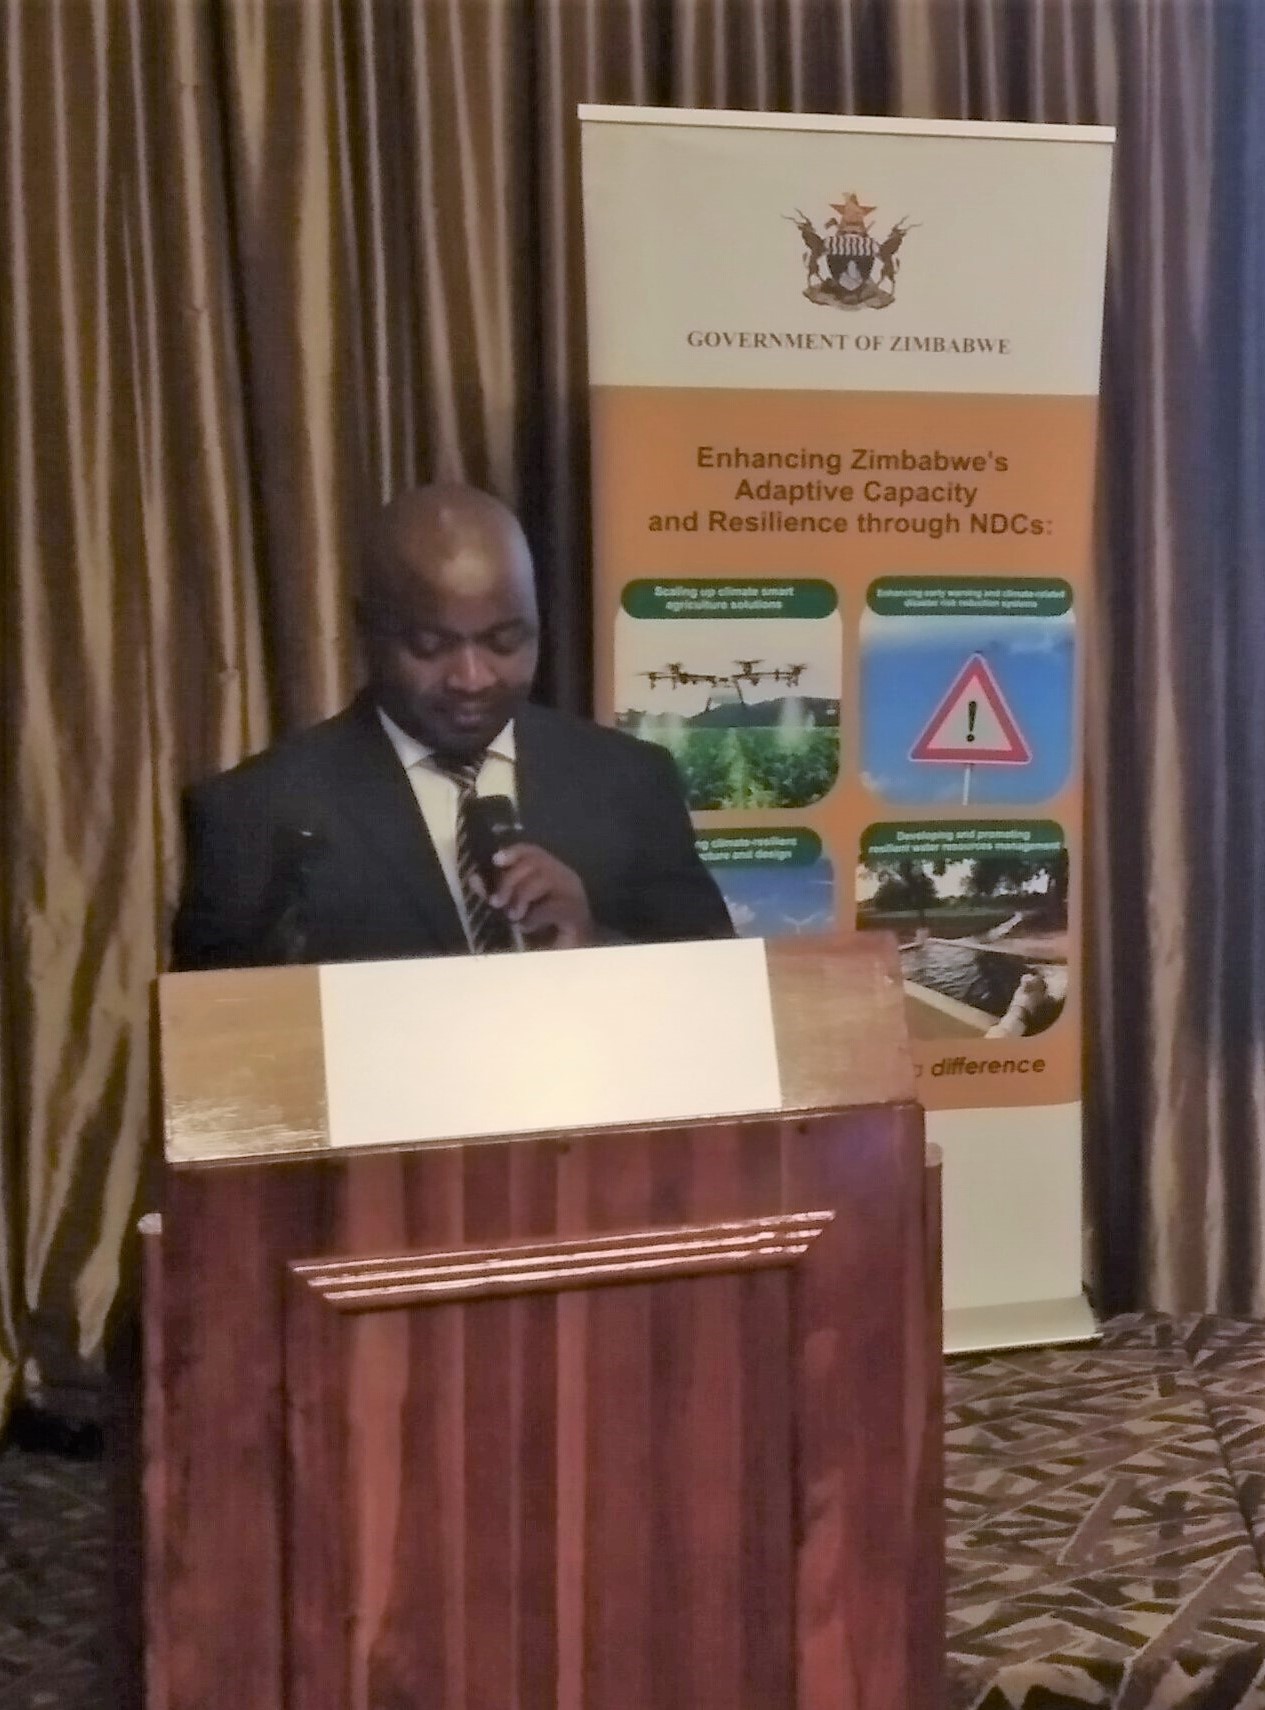 ICAT Zimbabwe WS Deputy Director for Climate Change Management (Mr. Kudzai Ndidzano) making opening remarks